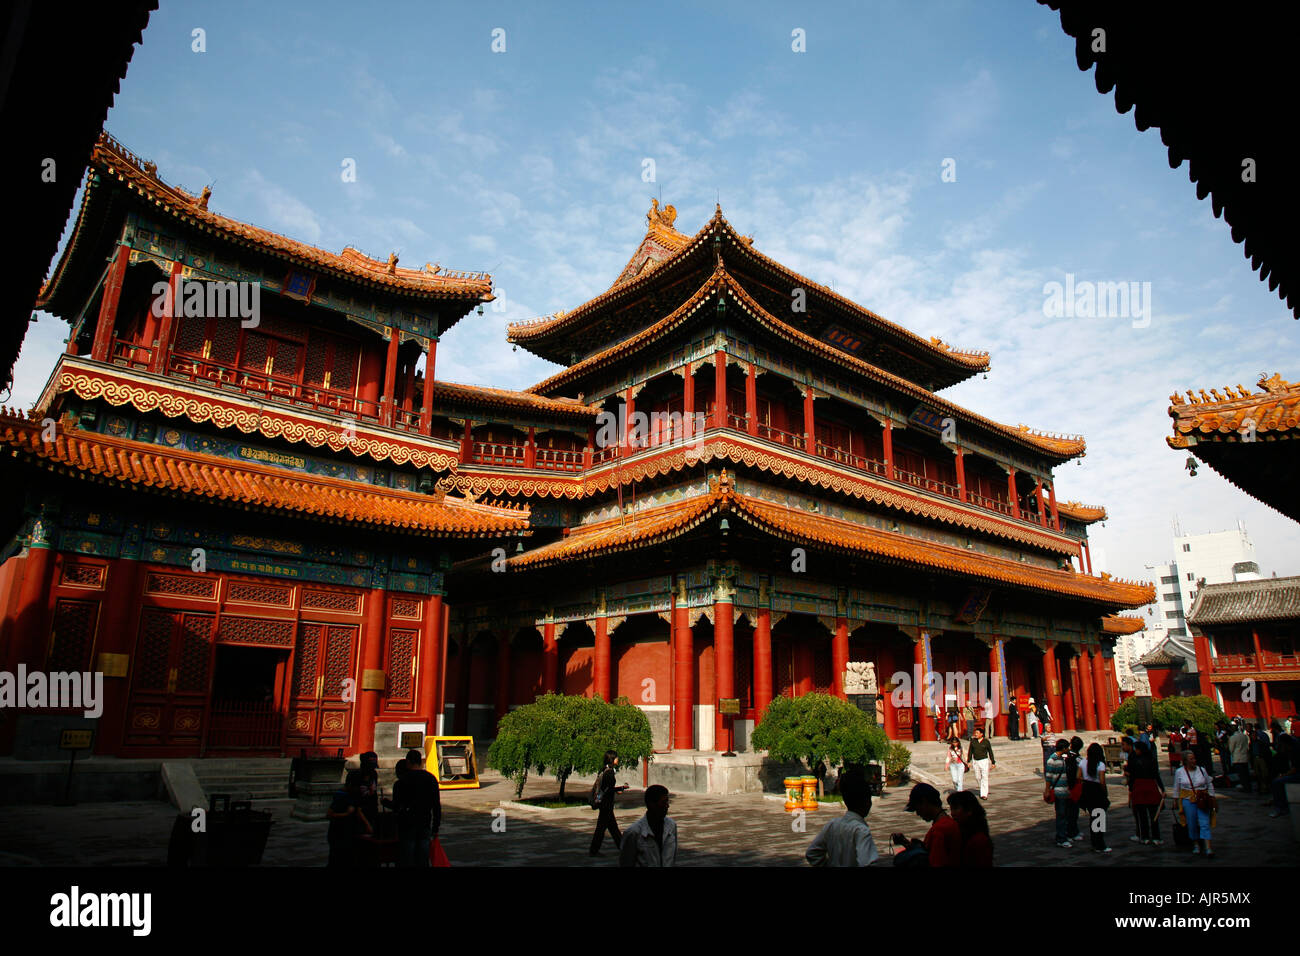 El Templo Lama Beijing China Foto de stock